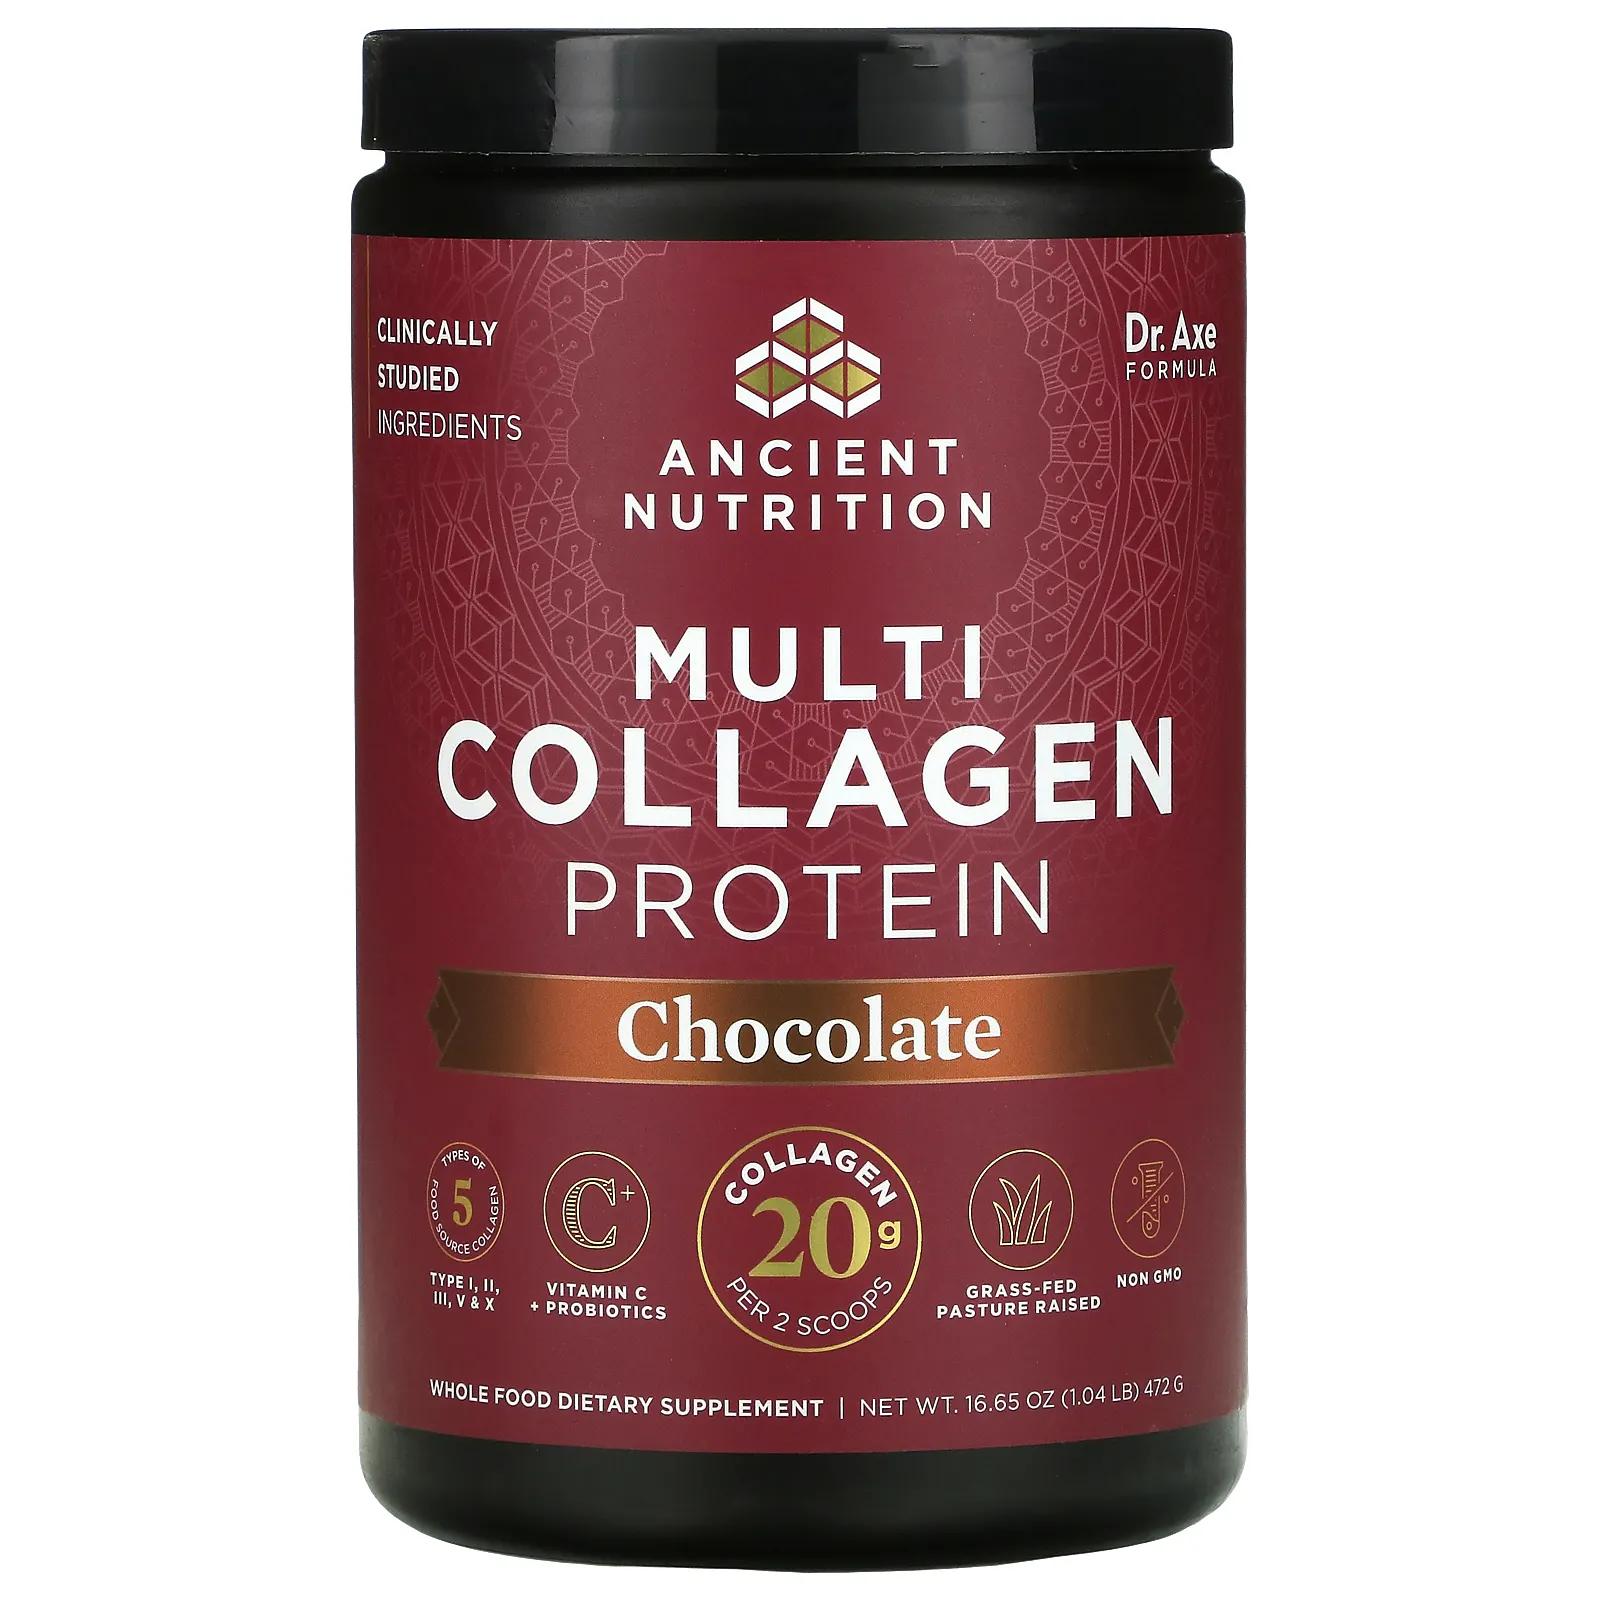 Dr. Axe / Ancient Nutrition Multi Collagen Protein Chocolate 18.5 oz (525 g) пищевая добавка dr axe ancient nutrition ежедневная защита иммунитета 60 таблеток